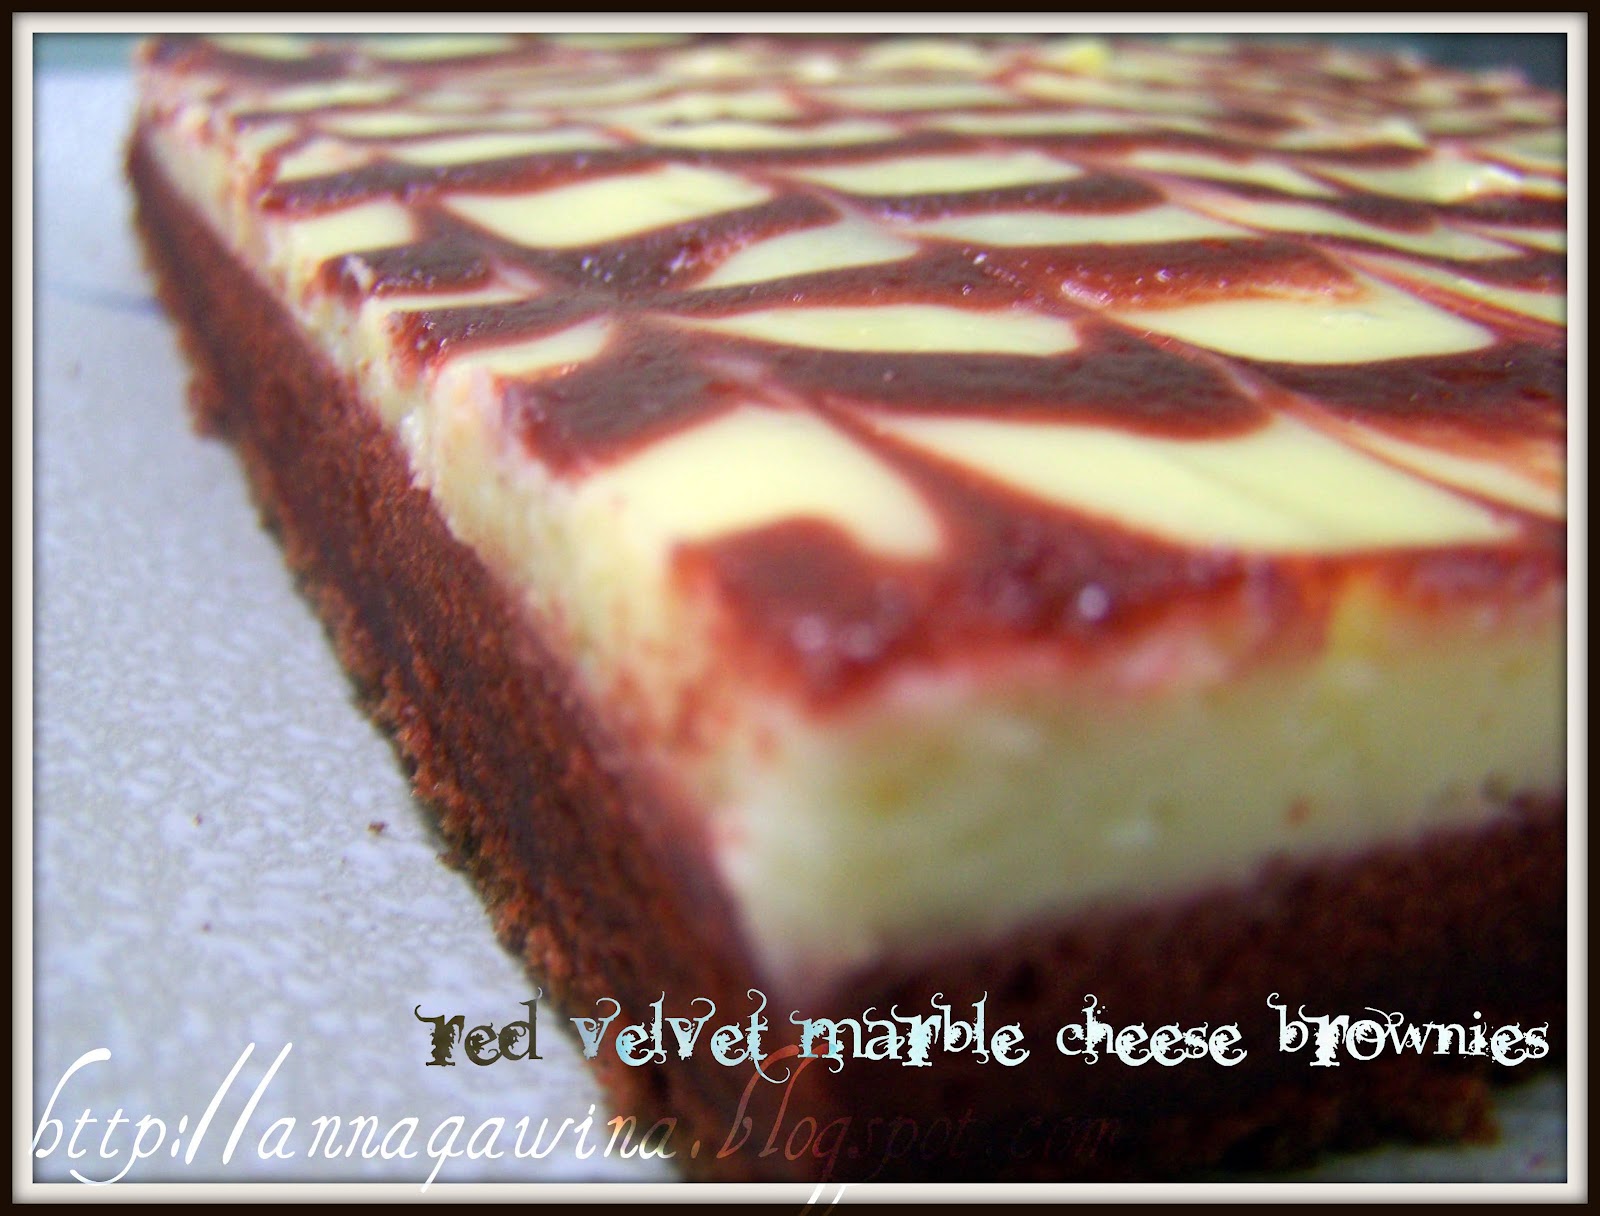 Annaqawina.blogspot.com : Red Velvet Marble Cheese Brownies